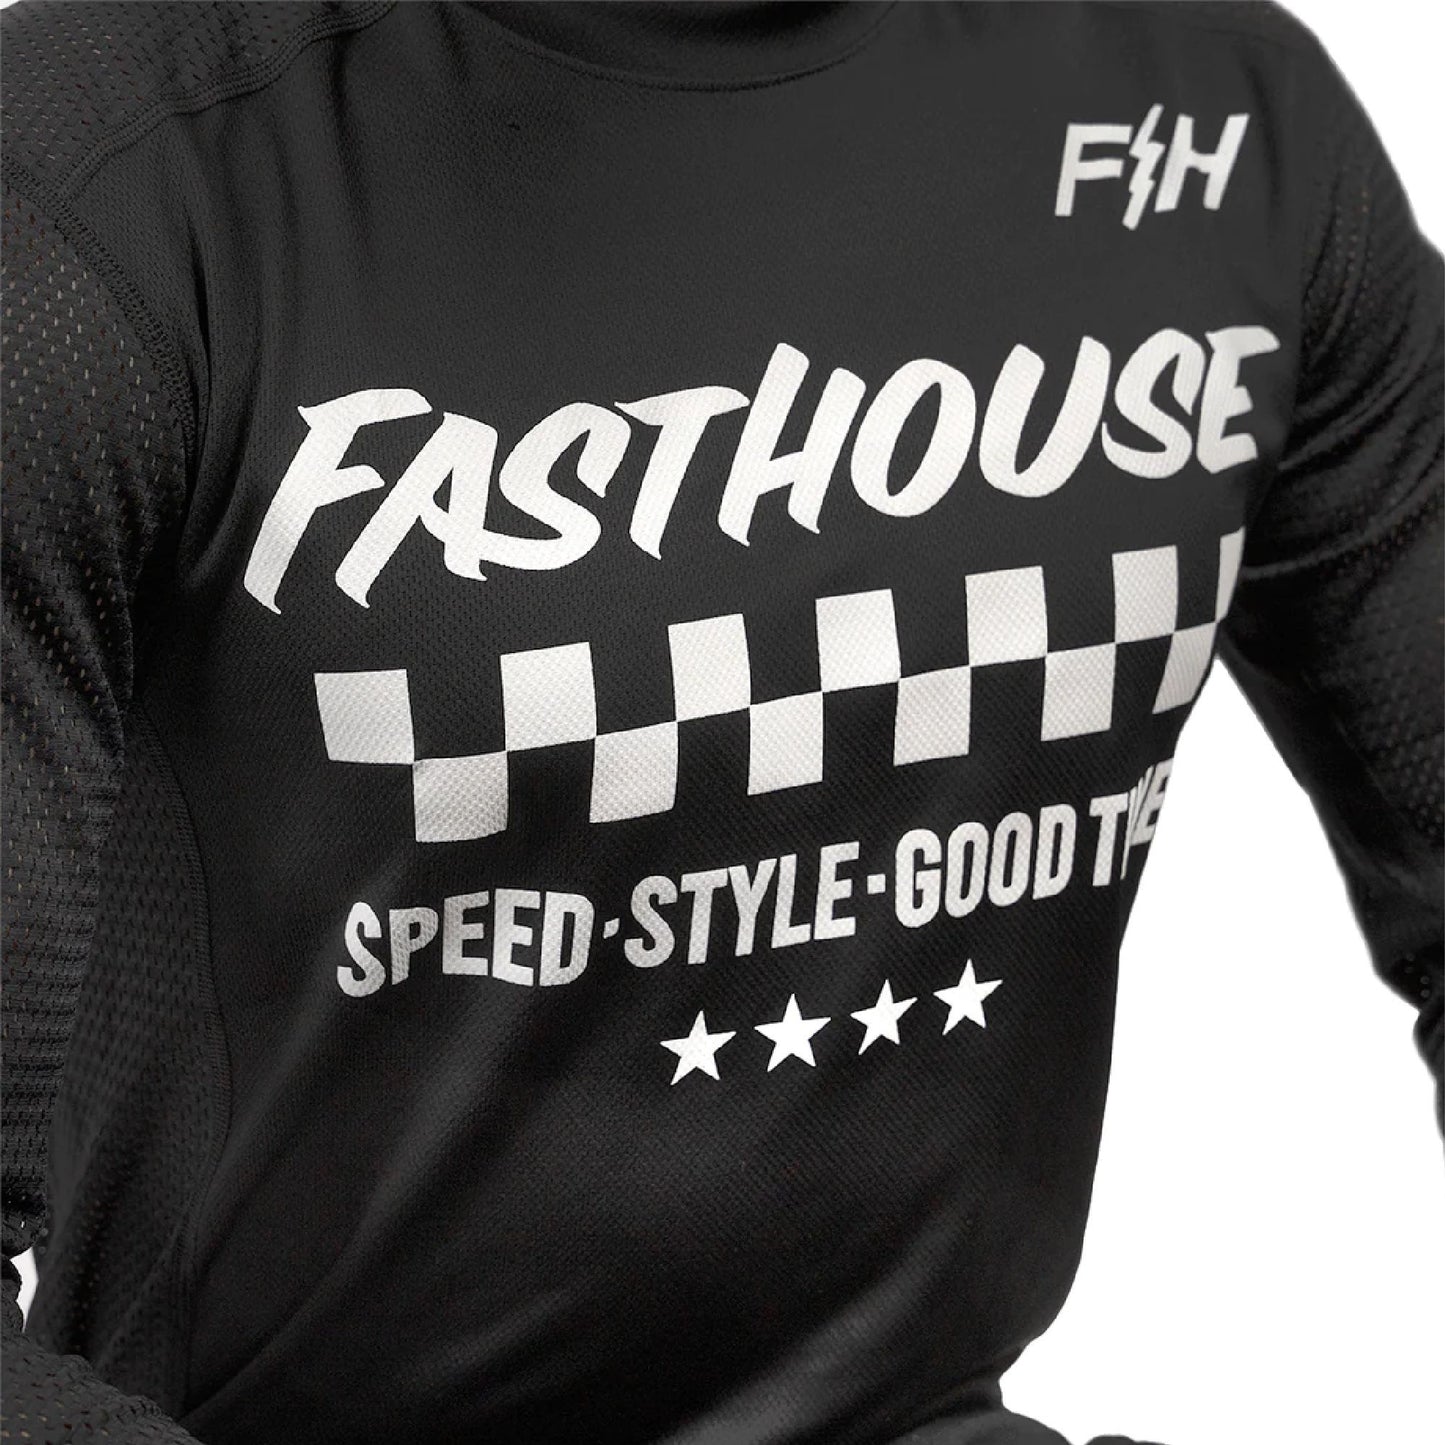 Fasthouse USA Originals Air Cooled Jersey Black Bike Jerseys